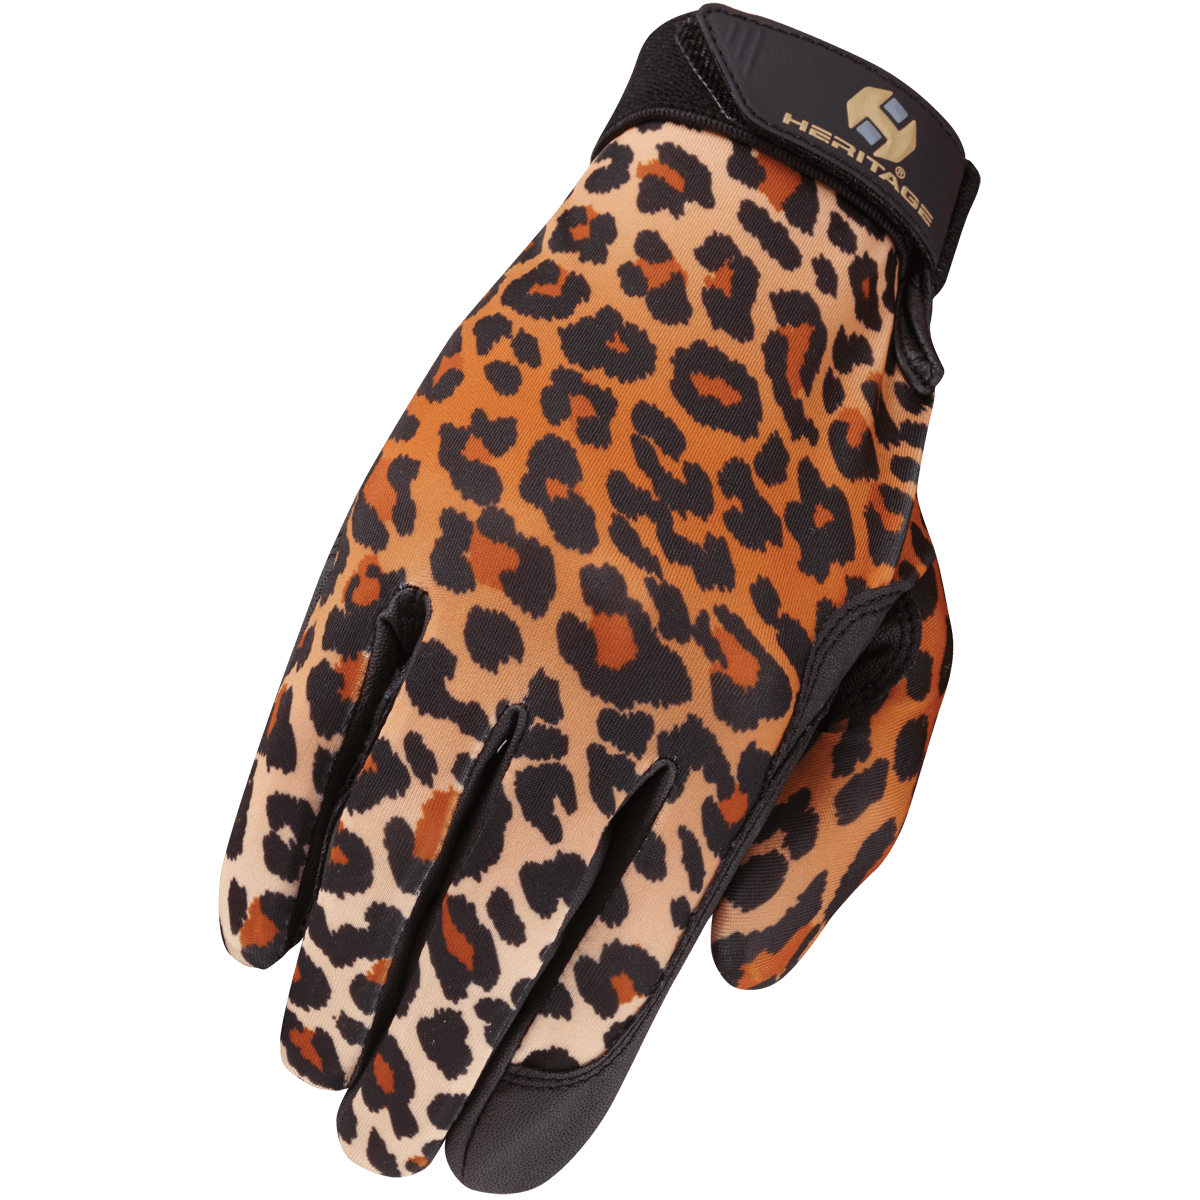 Heritage Performance Glove Leopard